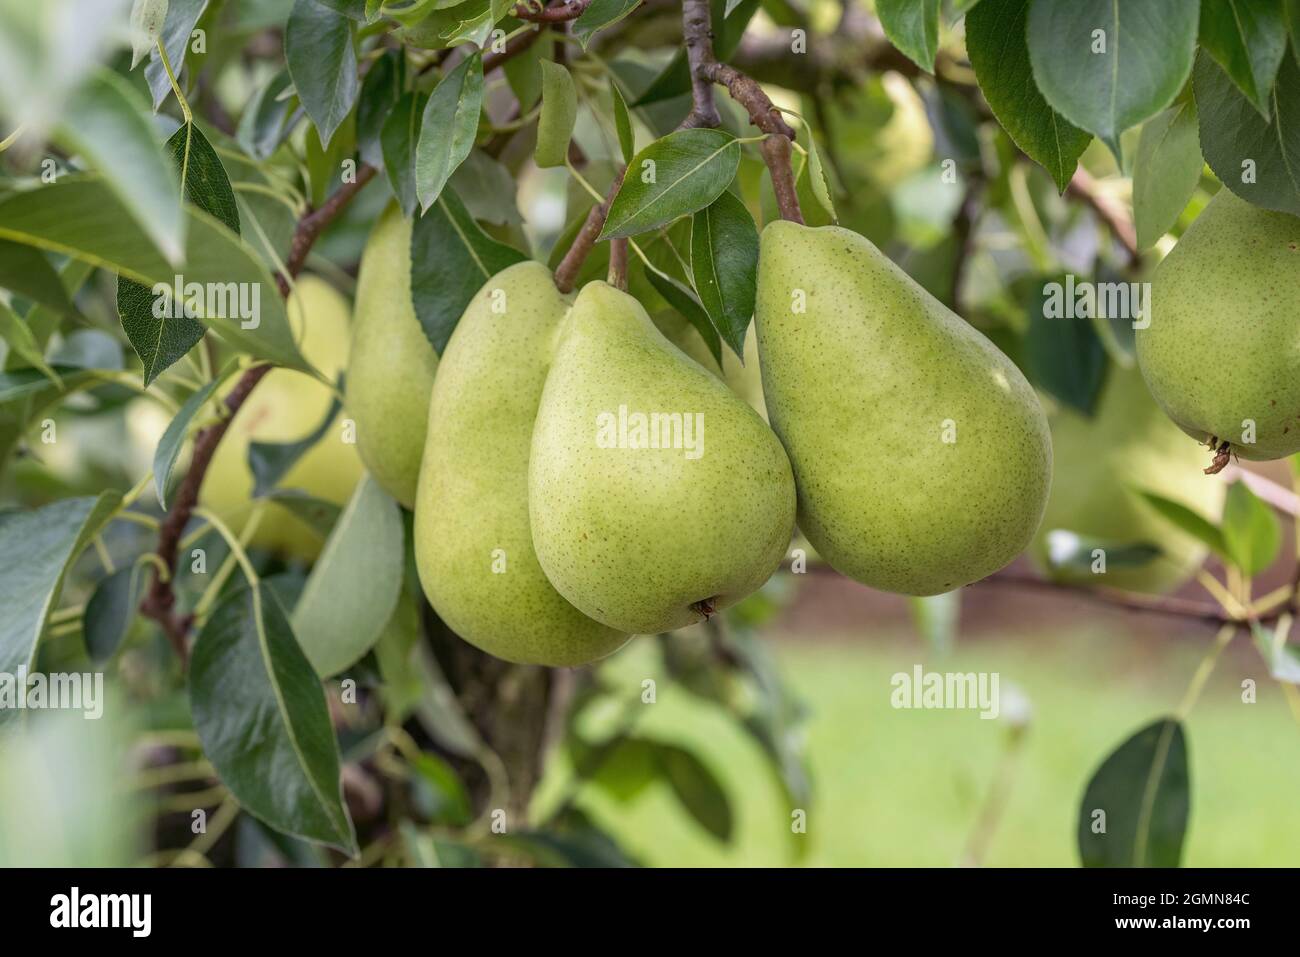 Common pear (Pyrus communis 'Delwilmor', Pyrus communis Delwilmor), pear on a tree, cultivar Delwilmor Stock Photo